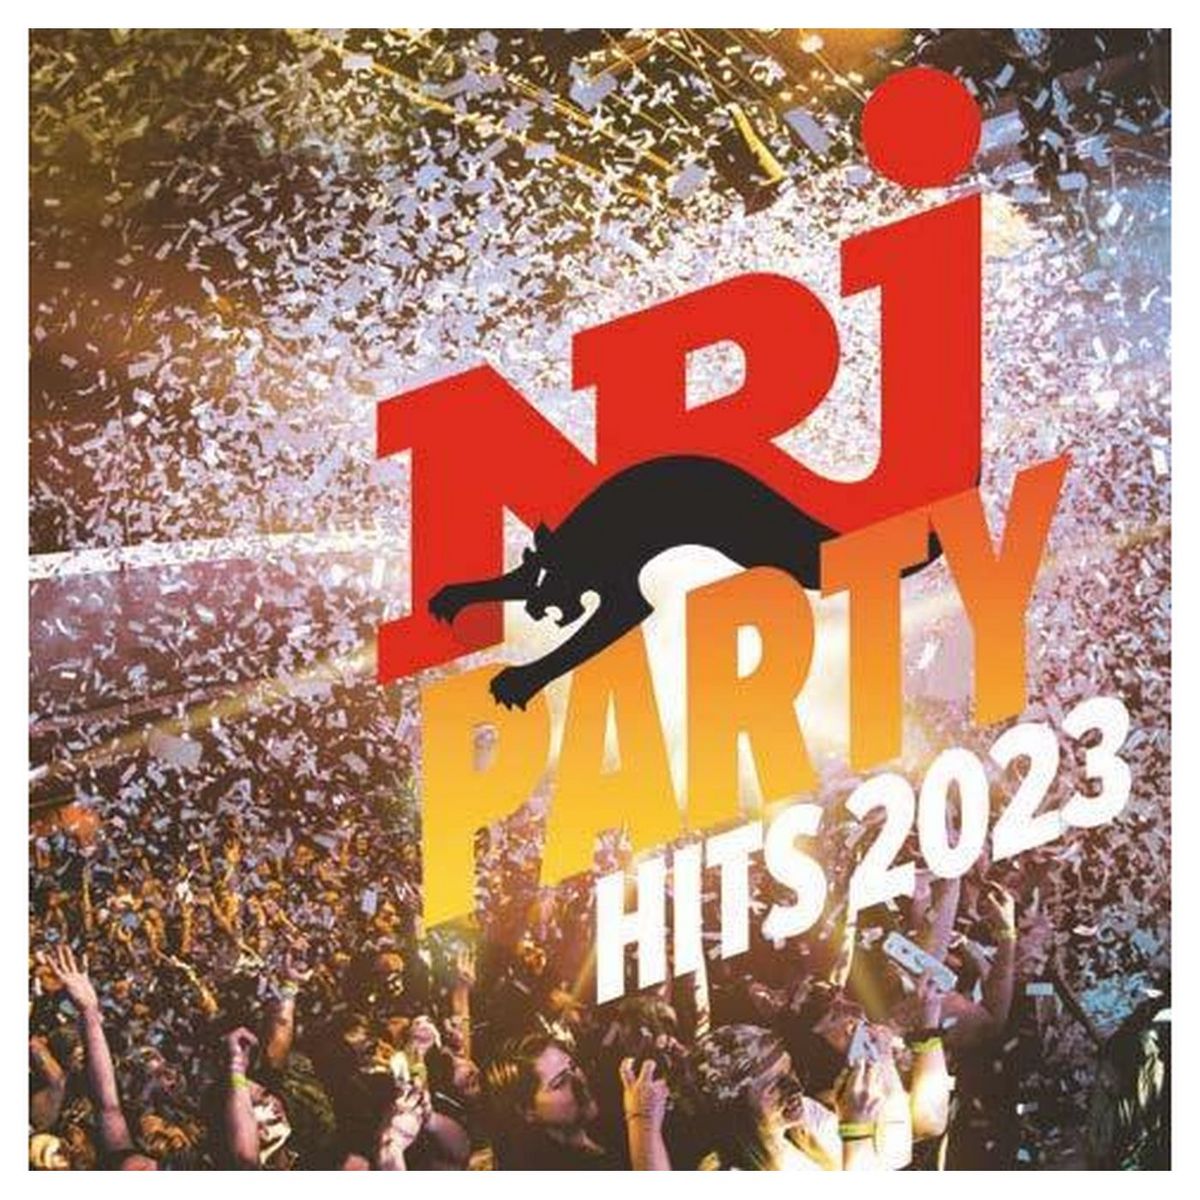 NRJ party hits 2022 CD